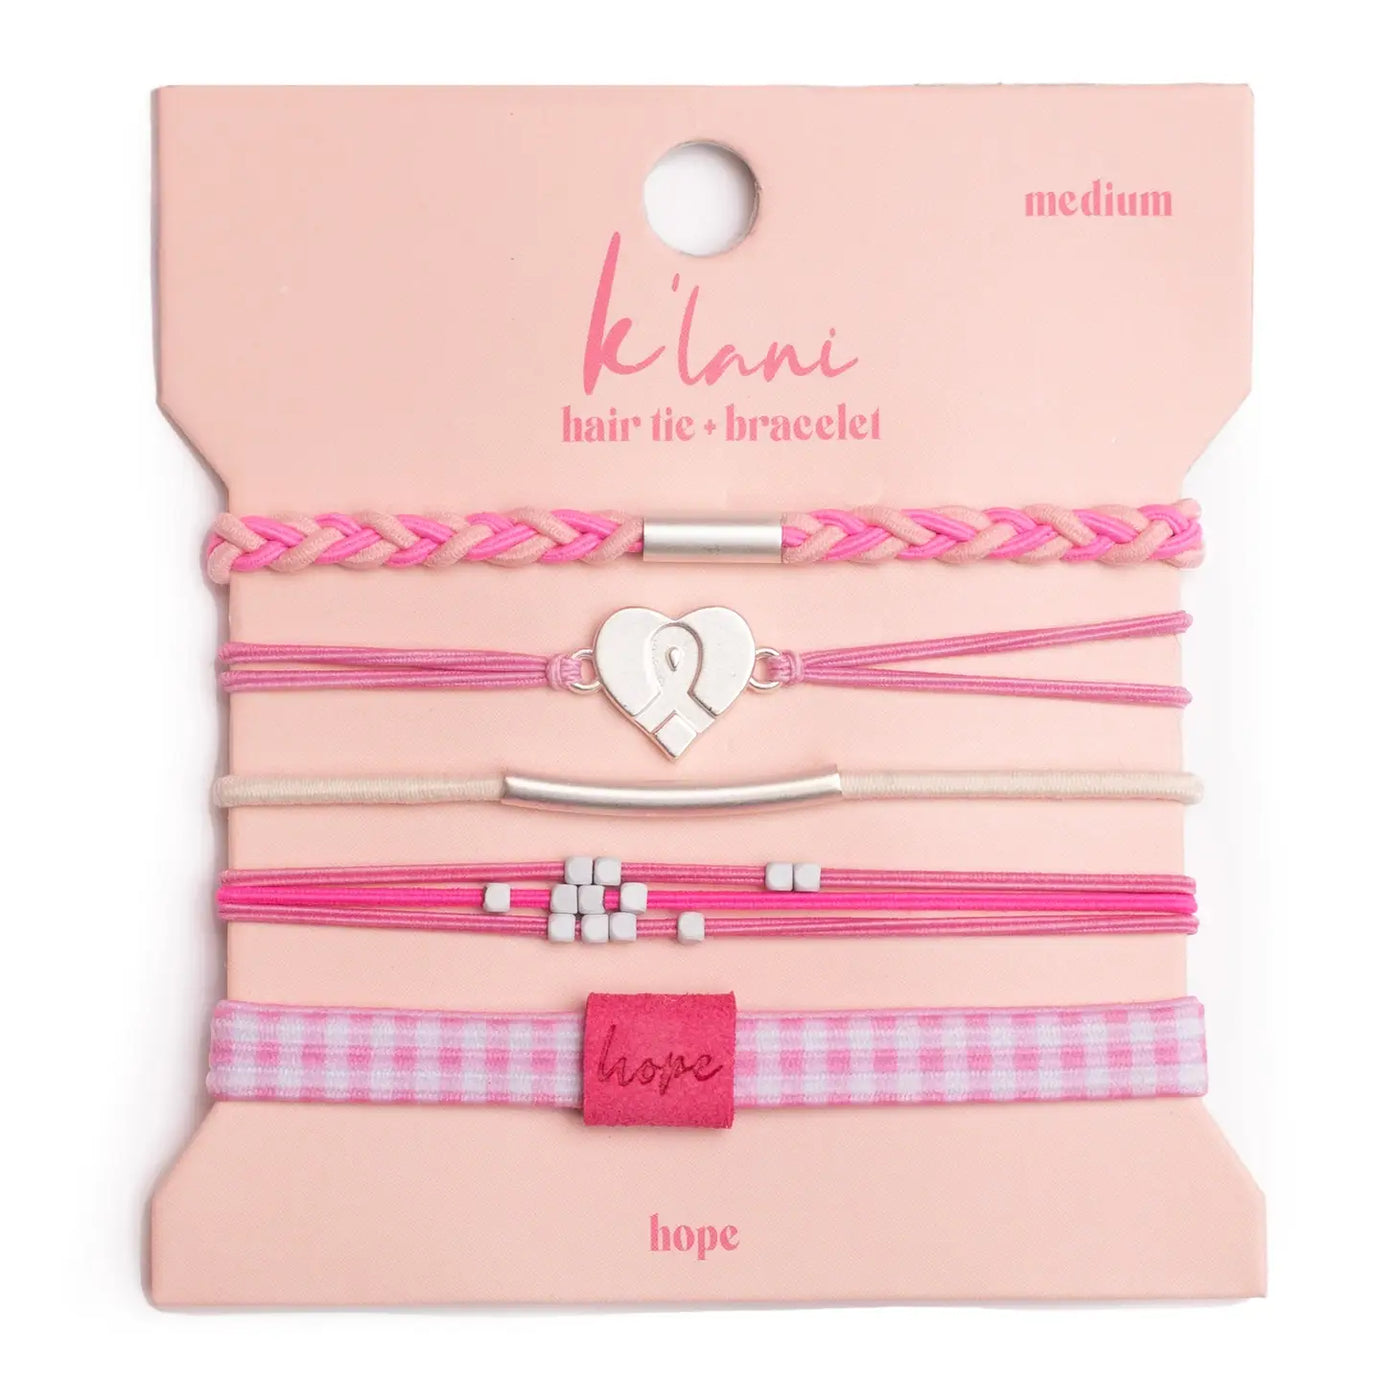 K'lani Hair Tie Bracelet- HOPE